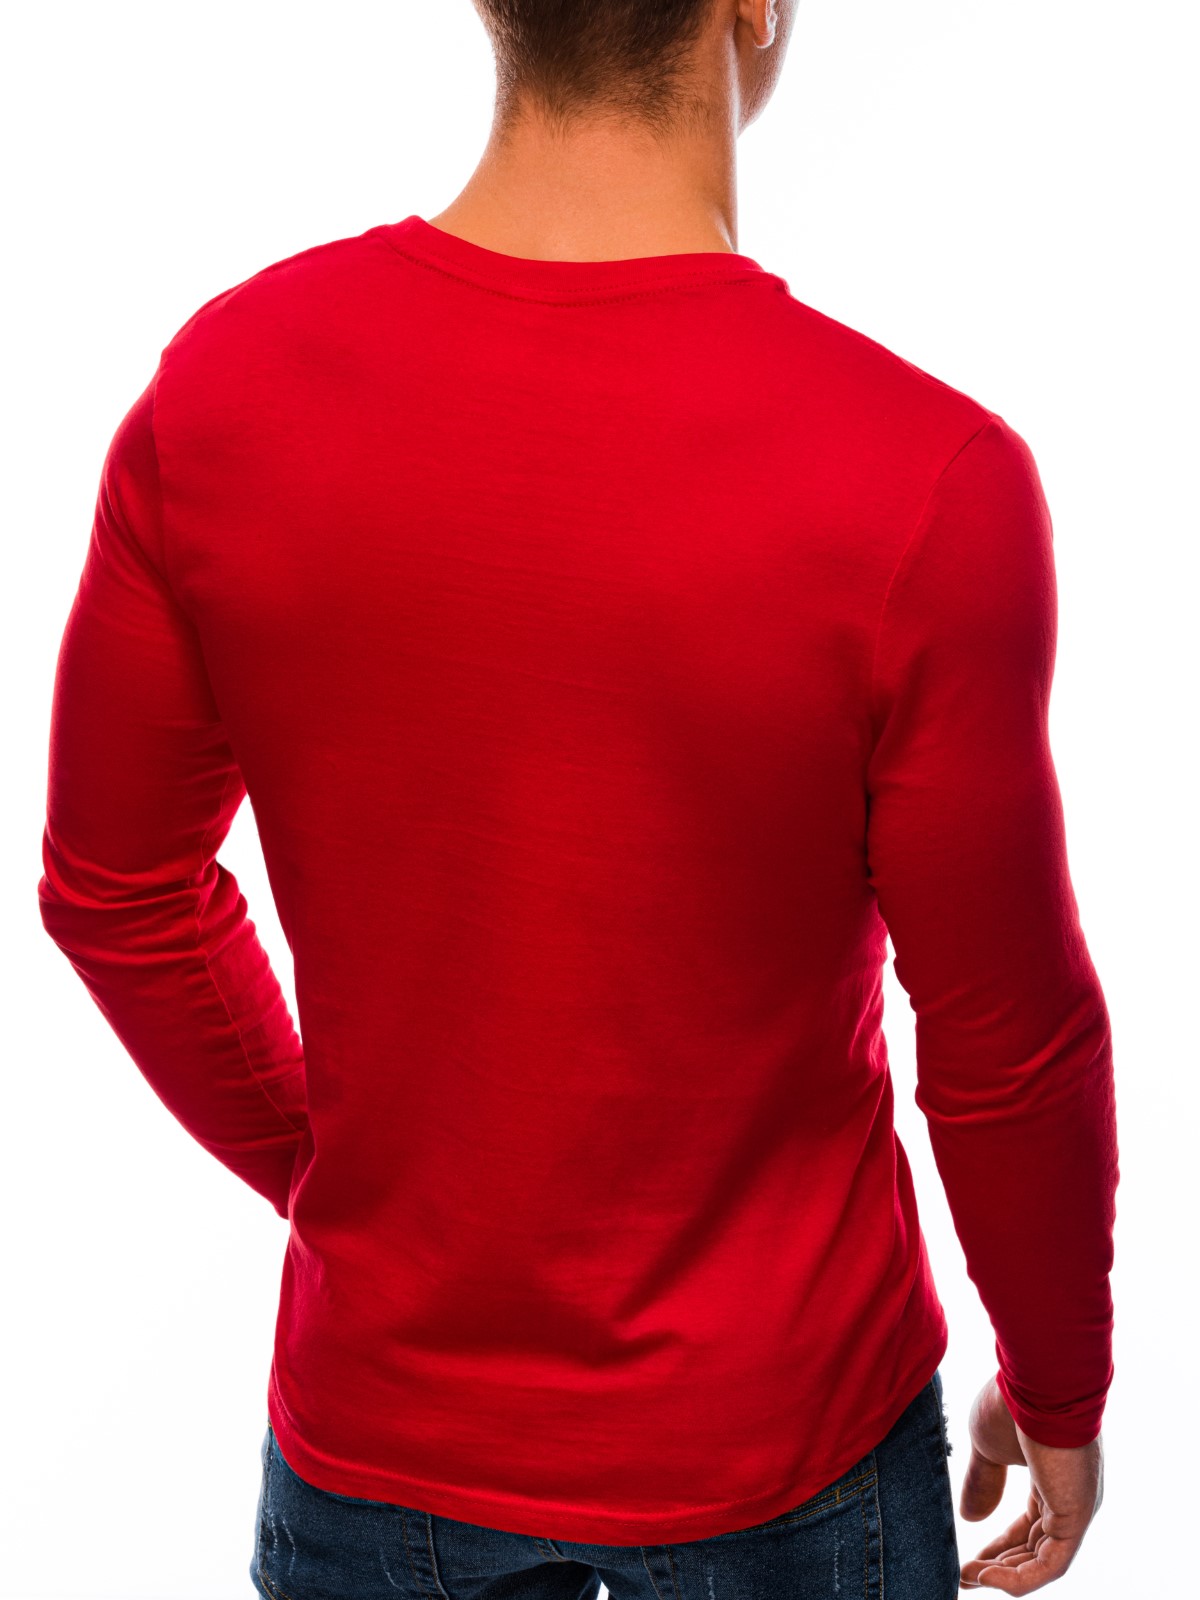 mens plain red shirt